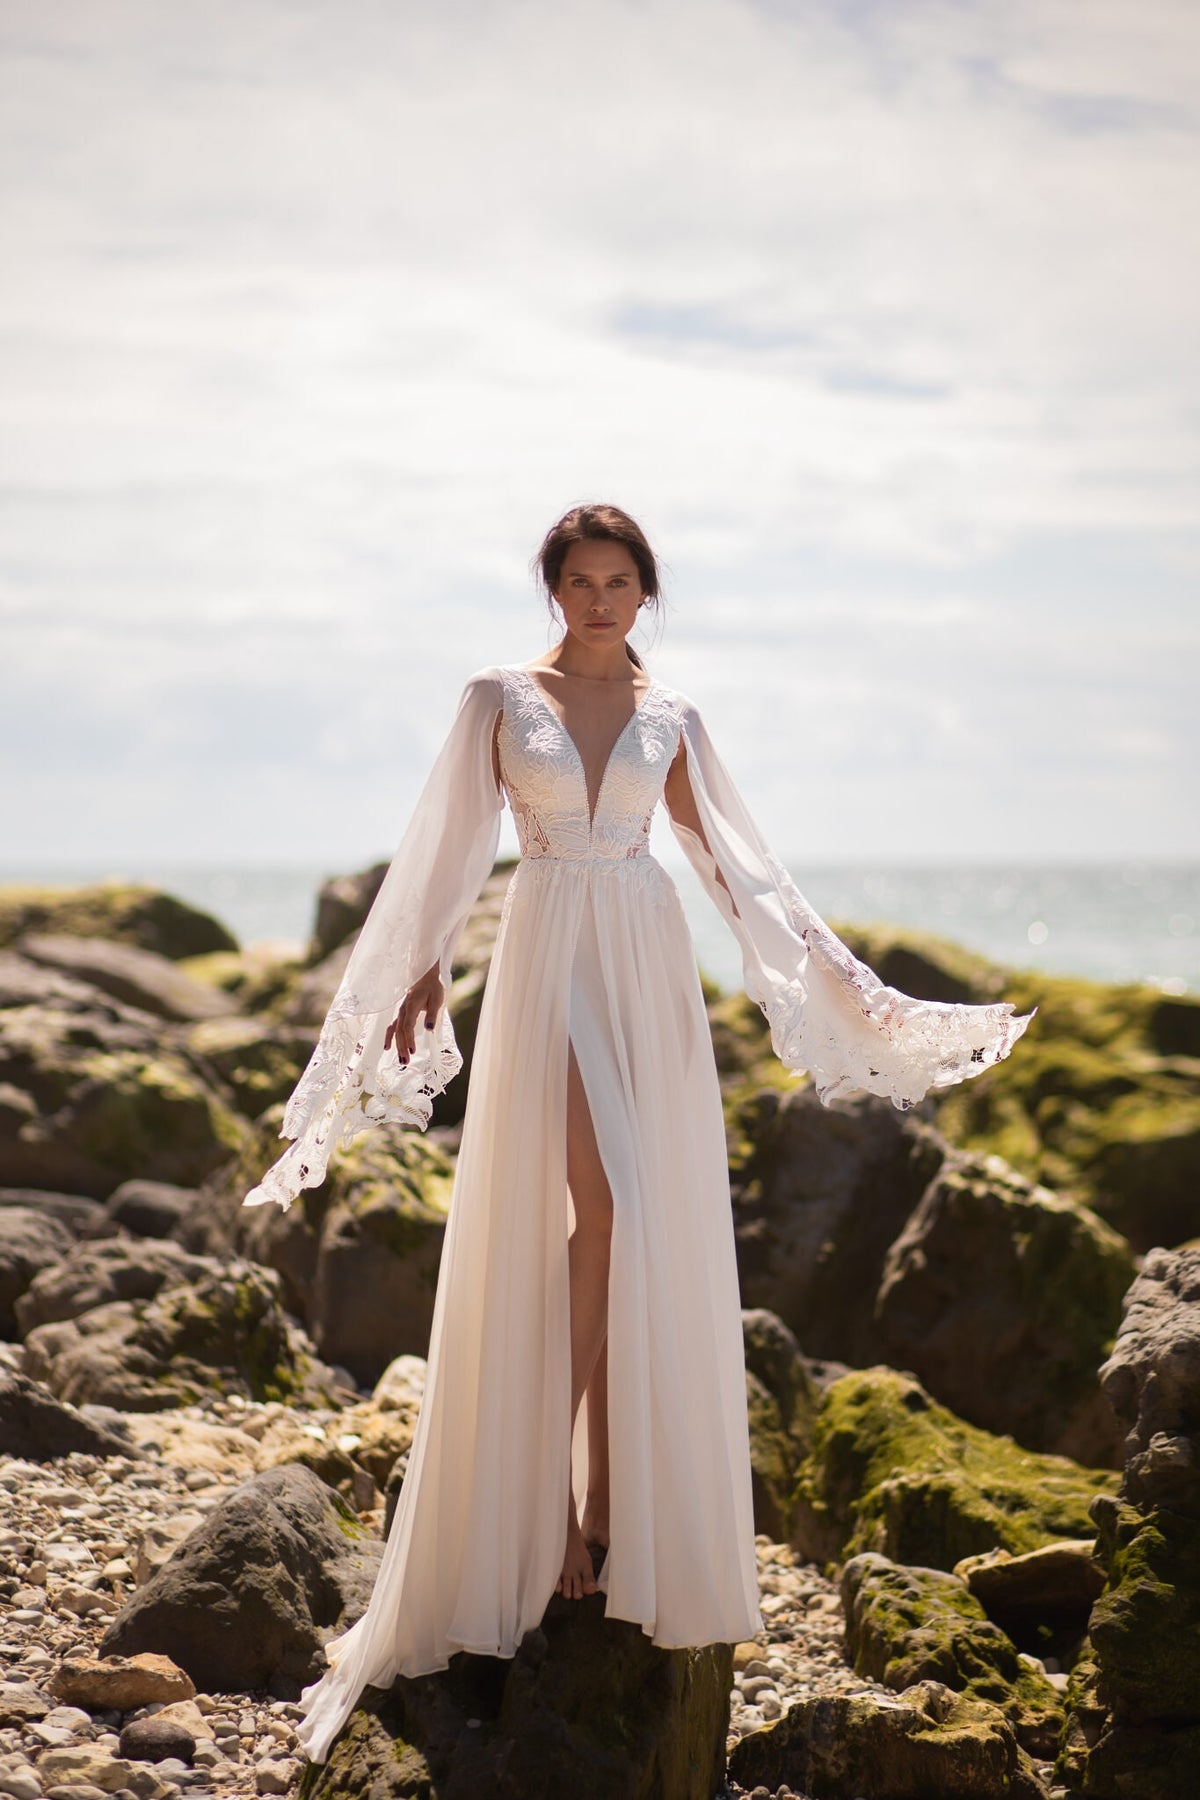 Beautiful Bohemian Beach Style Boho Lace Aline Long Full Bell Sleeves Sexy V Neckline Bodice Wedding Dress Bridal Gown Simple Chiffon Lace